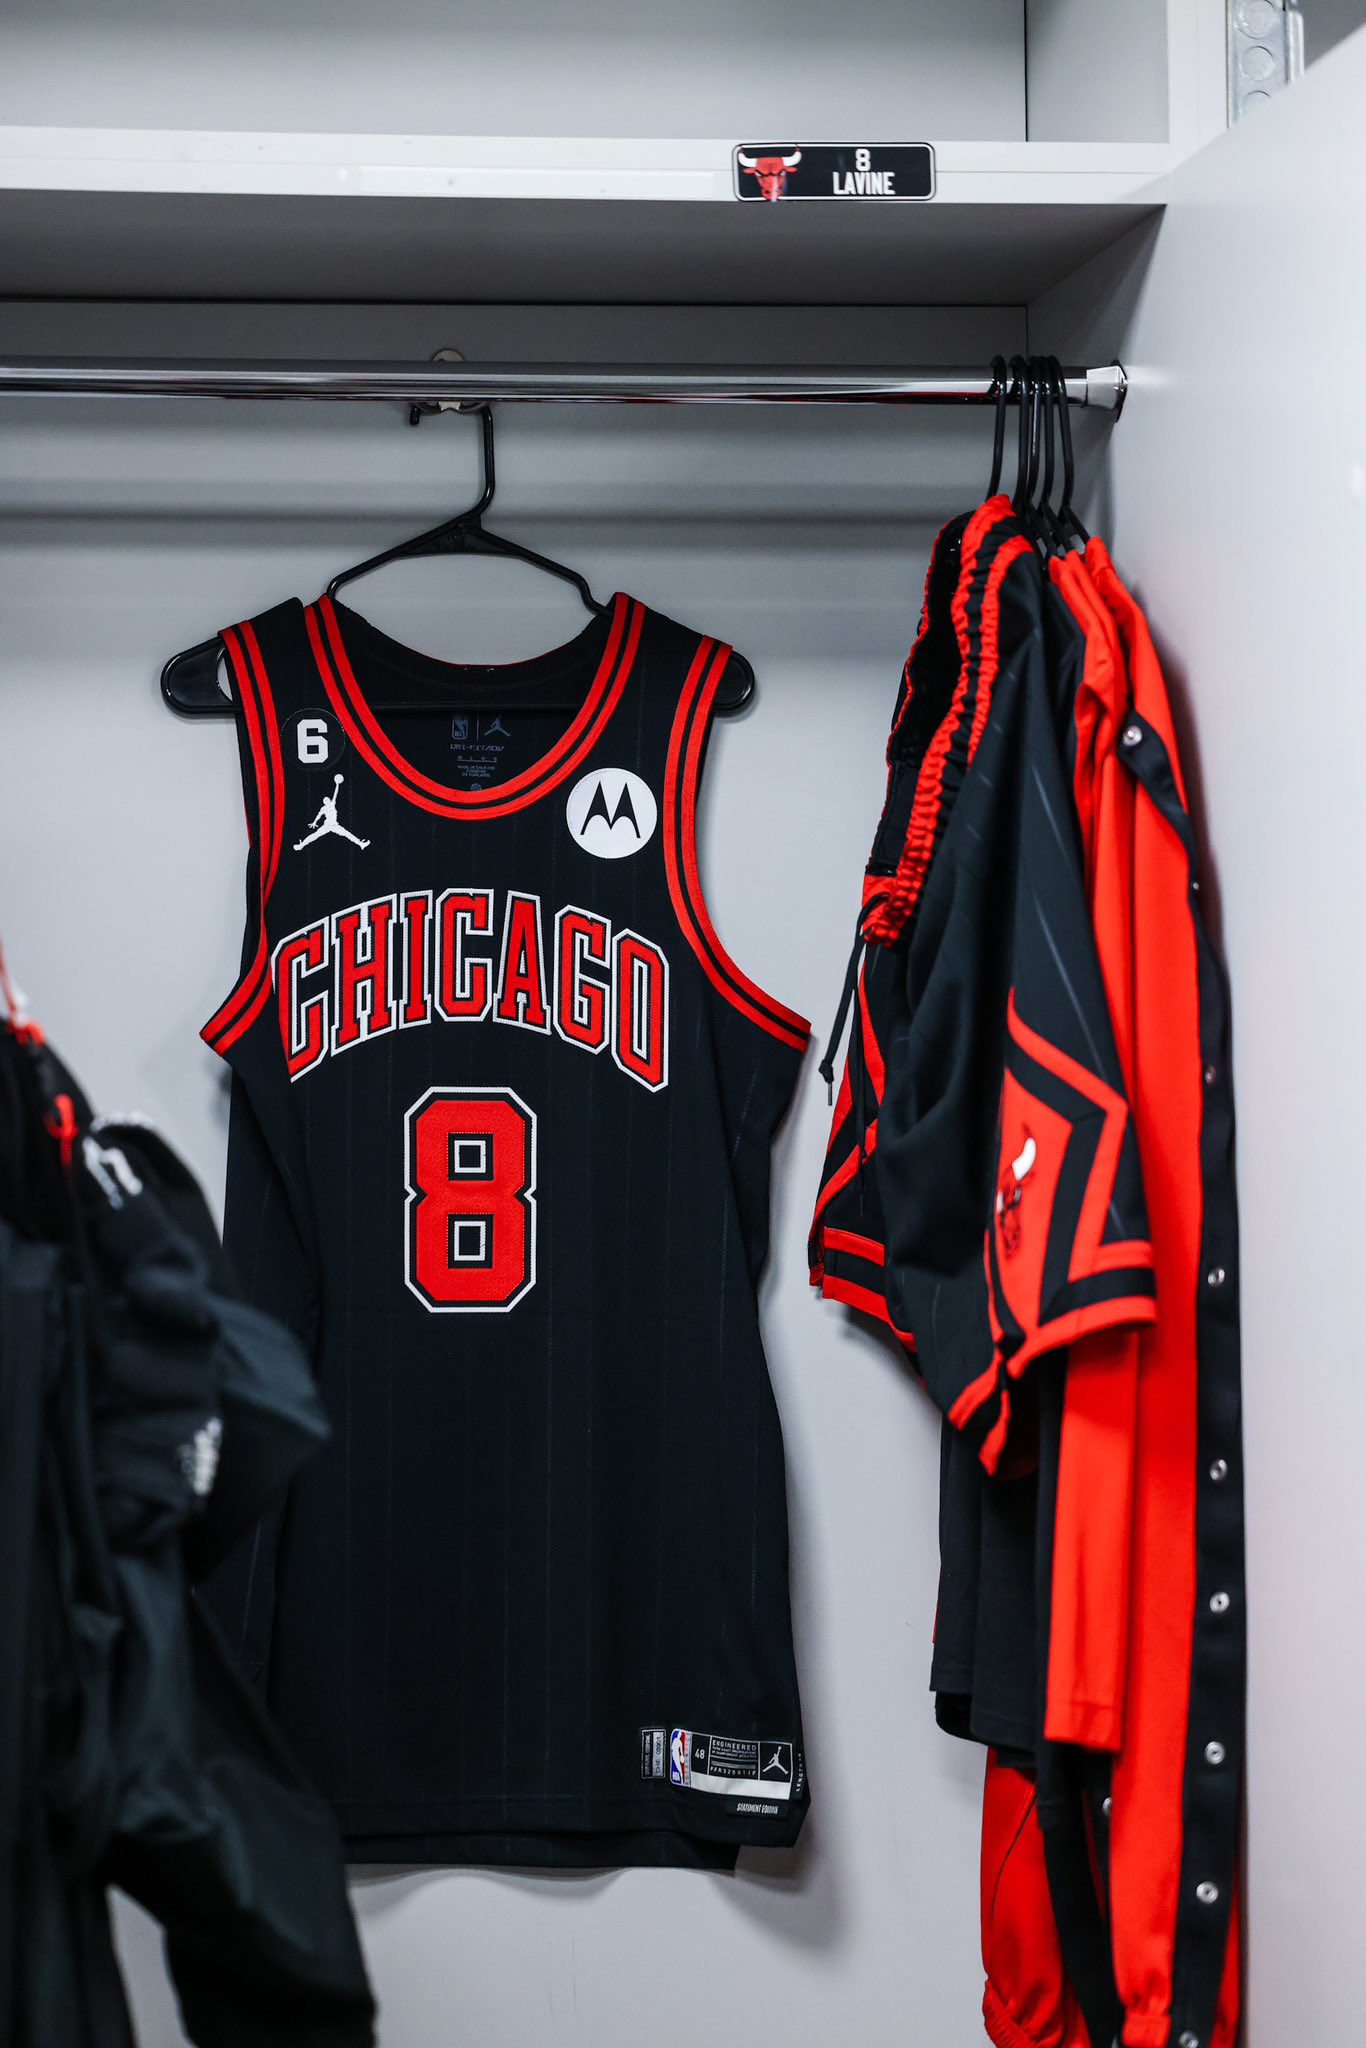 Chicago Bulls on X: The attire tonight is black.